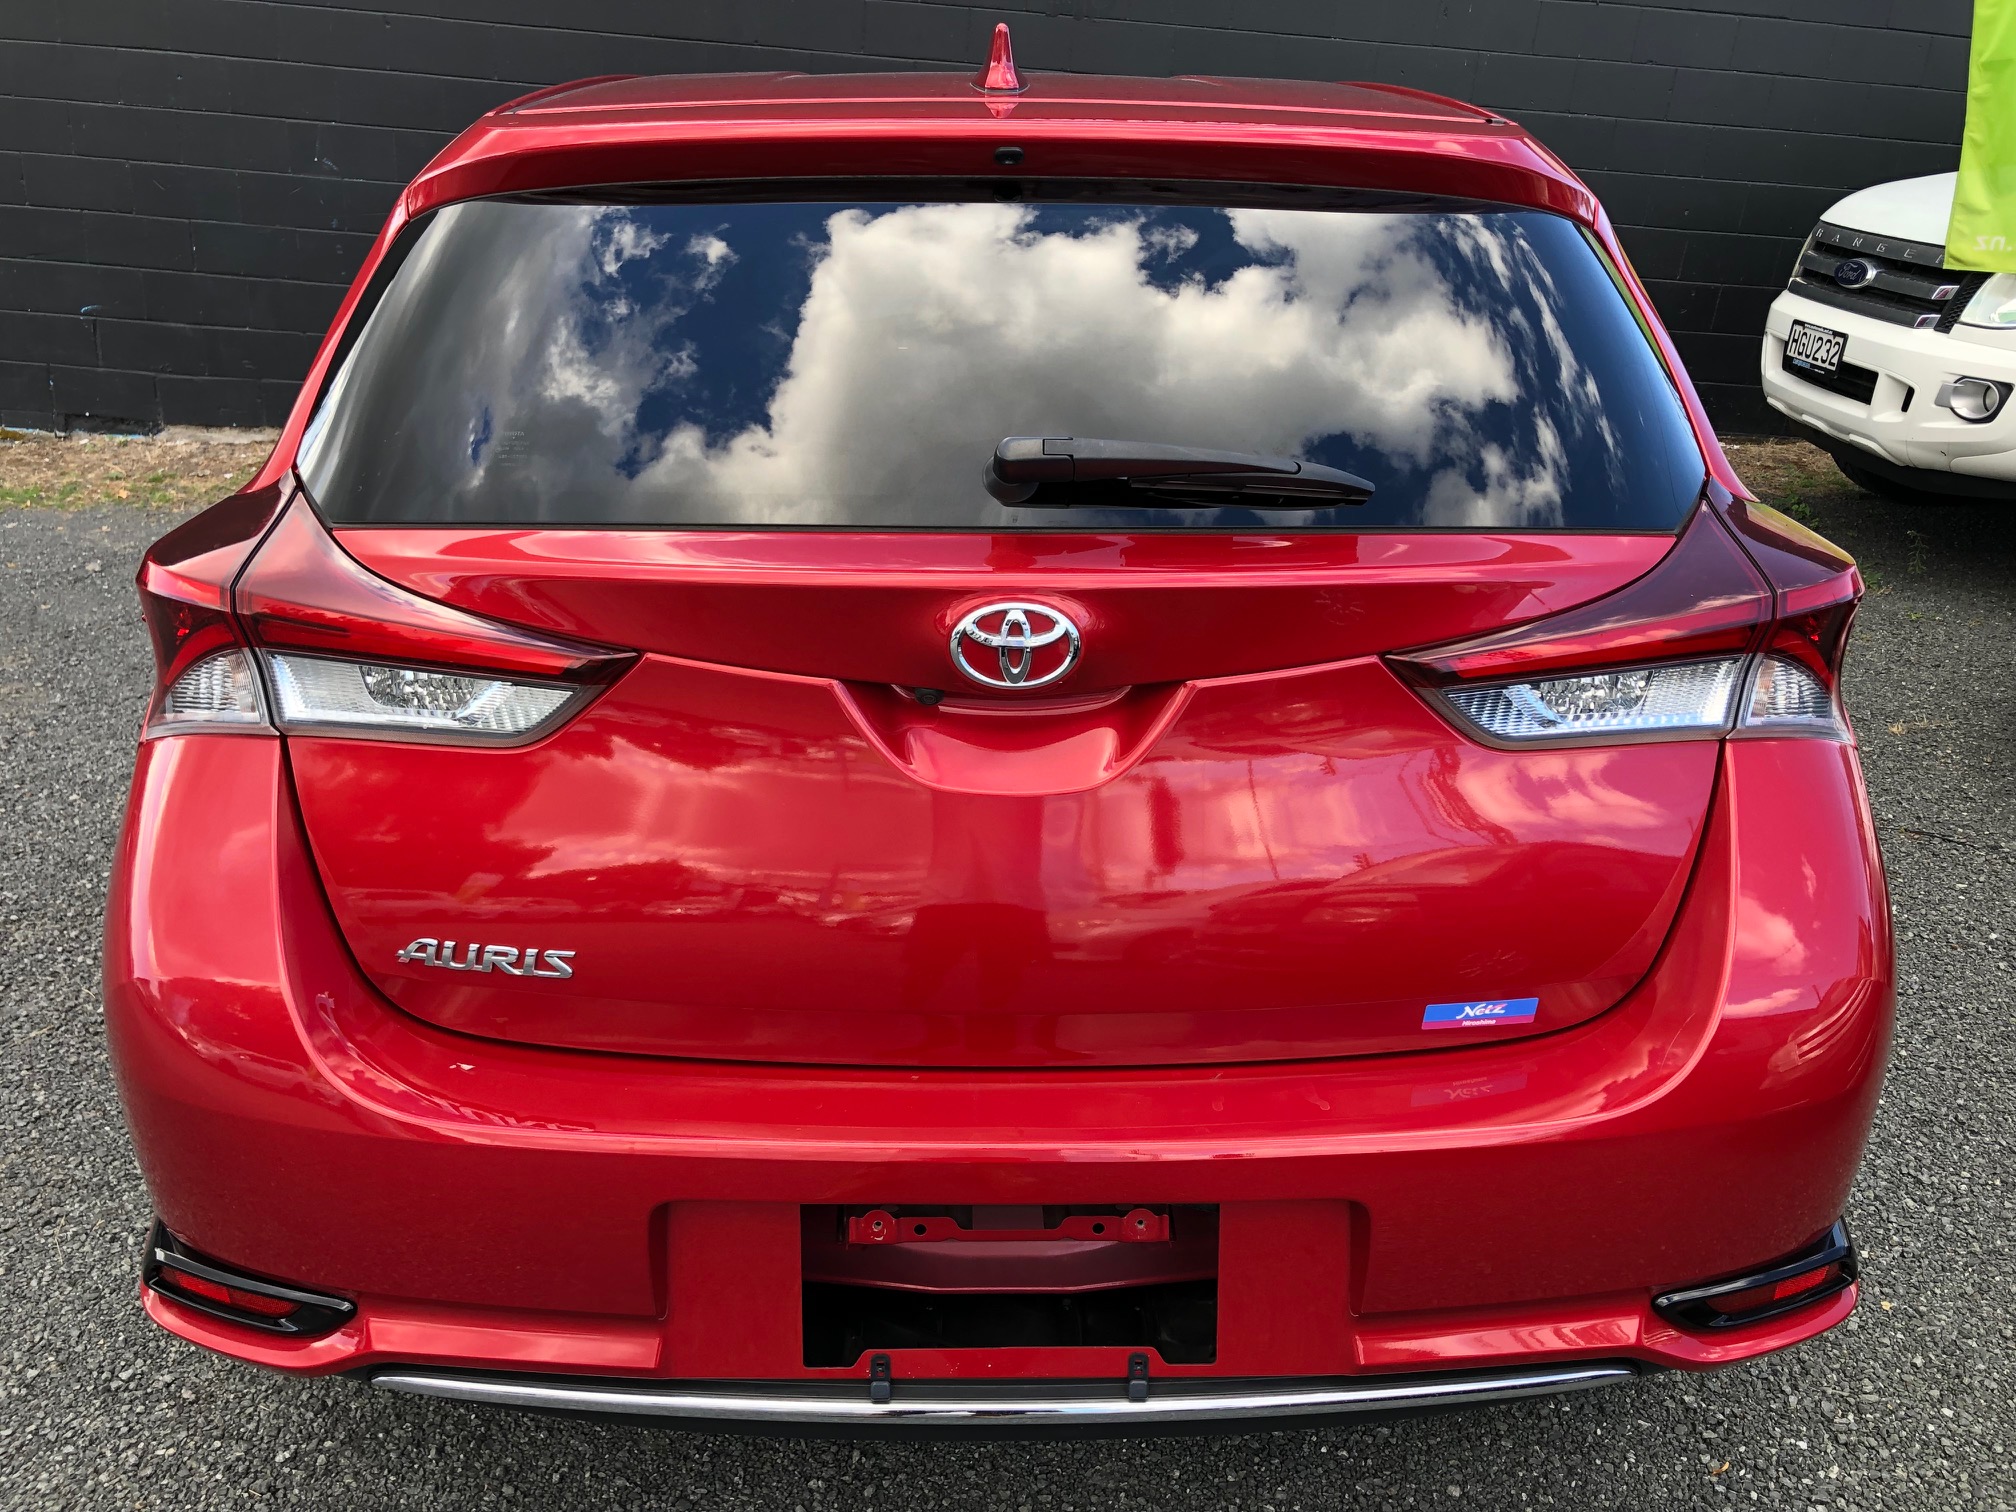 Toyota Auris 2016 Image 4